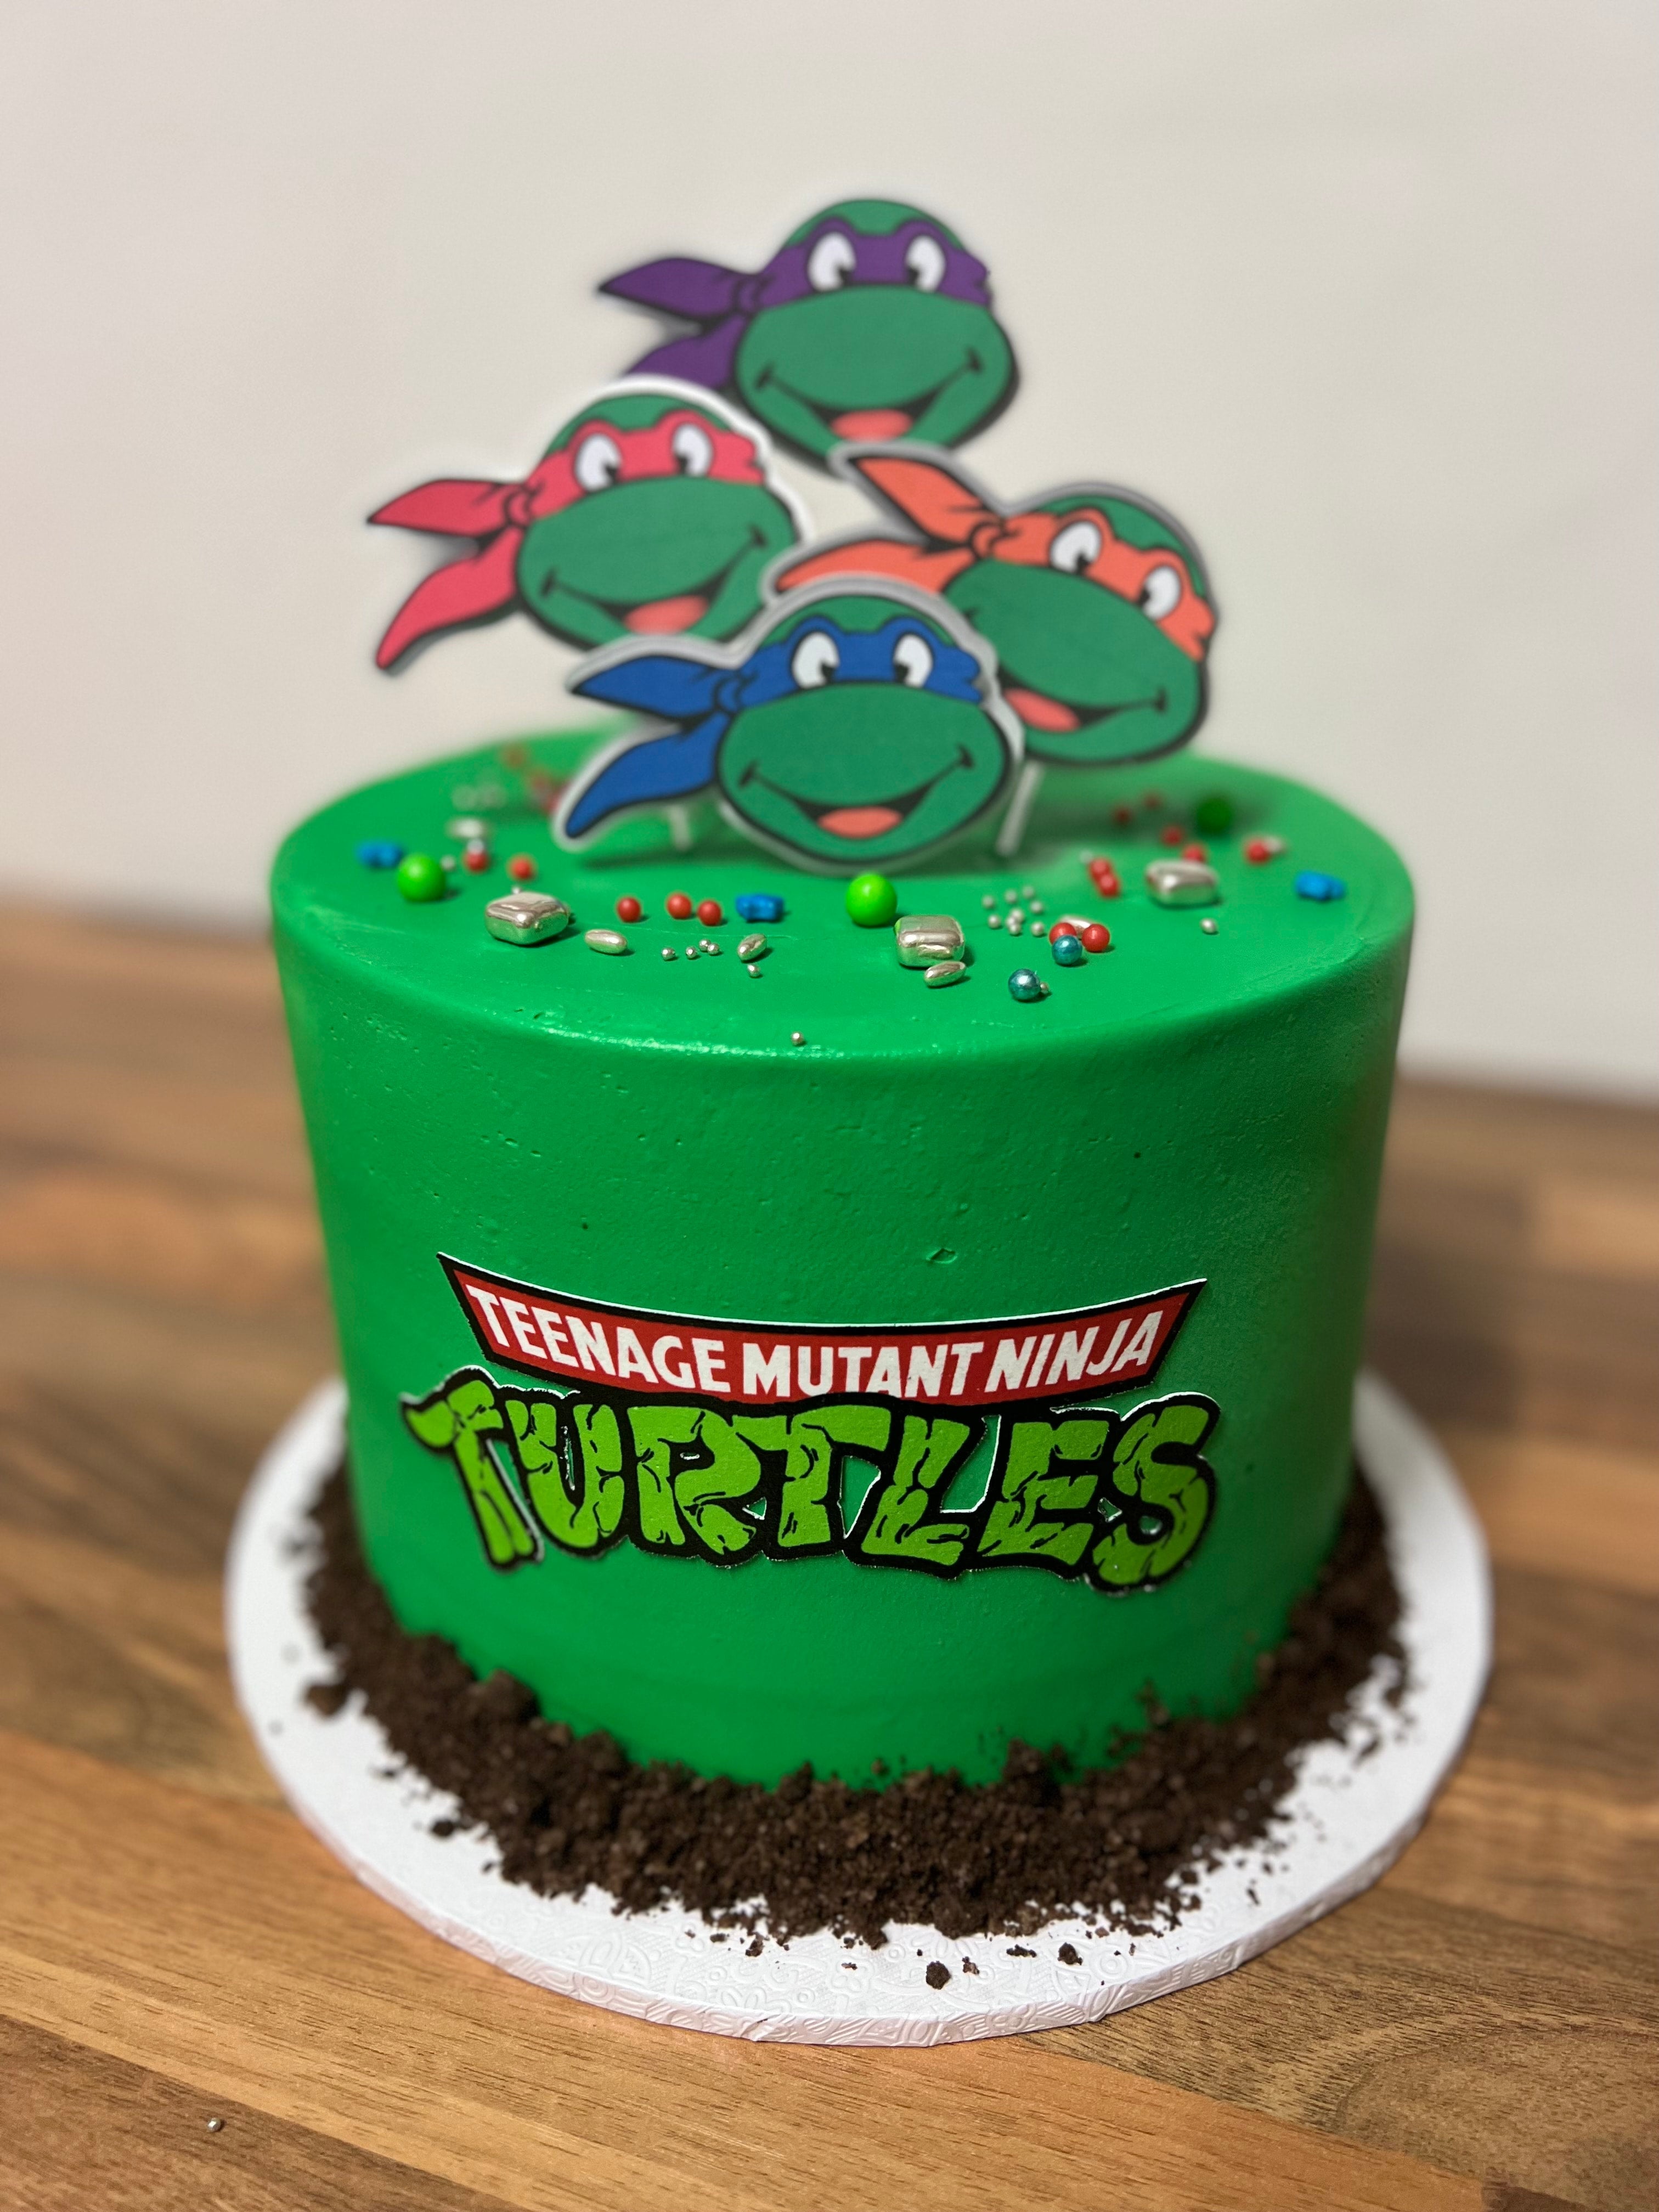 NINJA TURTLE CAKE (kids birthday cake idea and tutorial) - YouTube